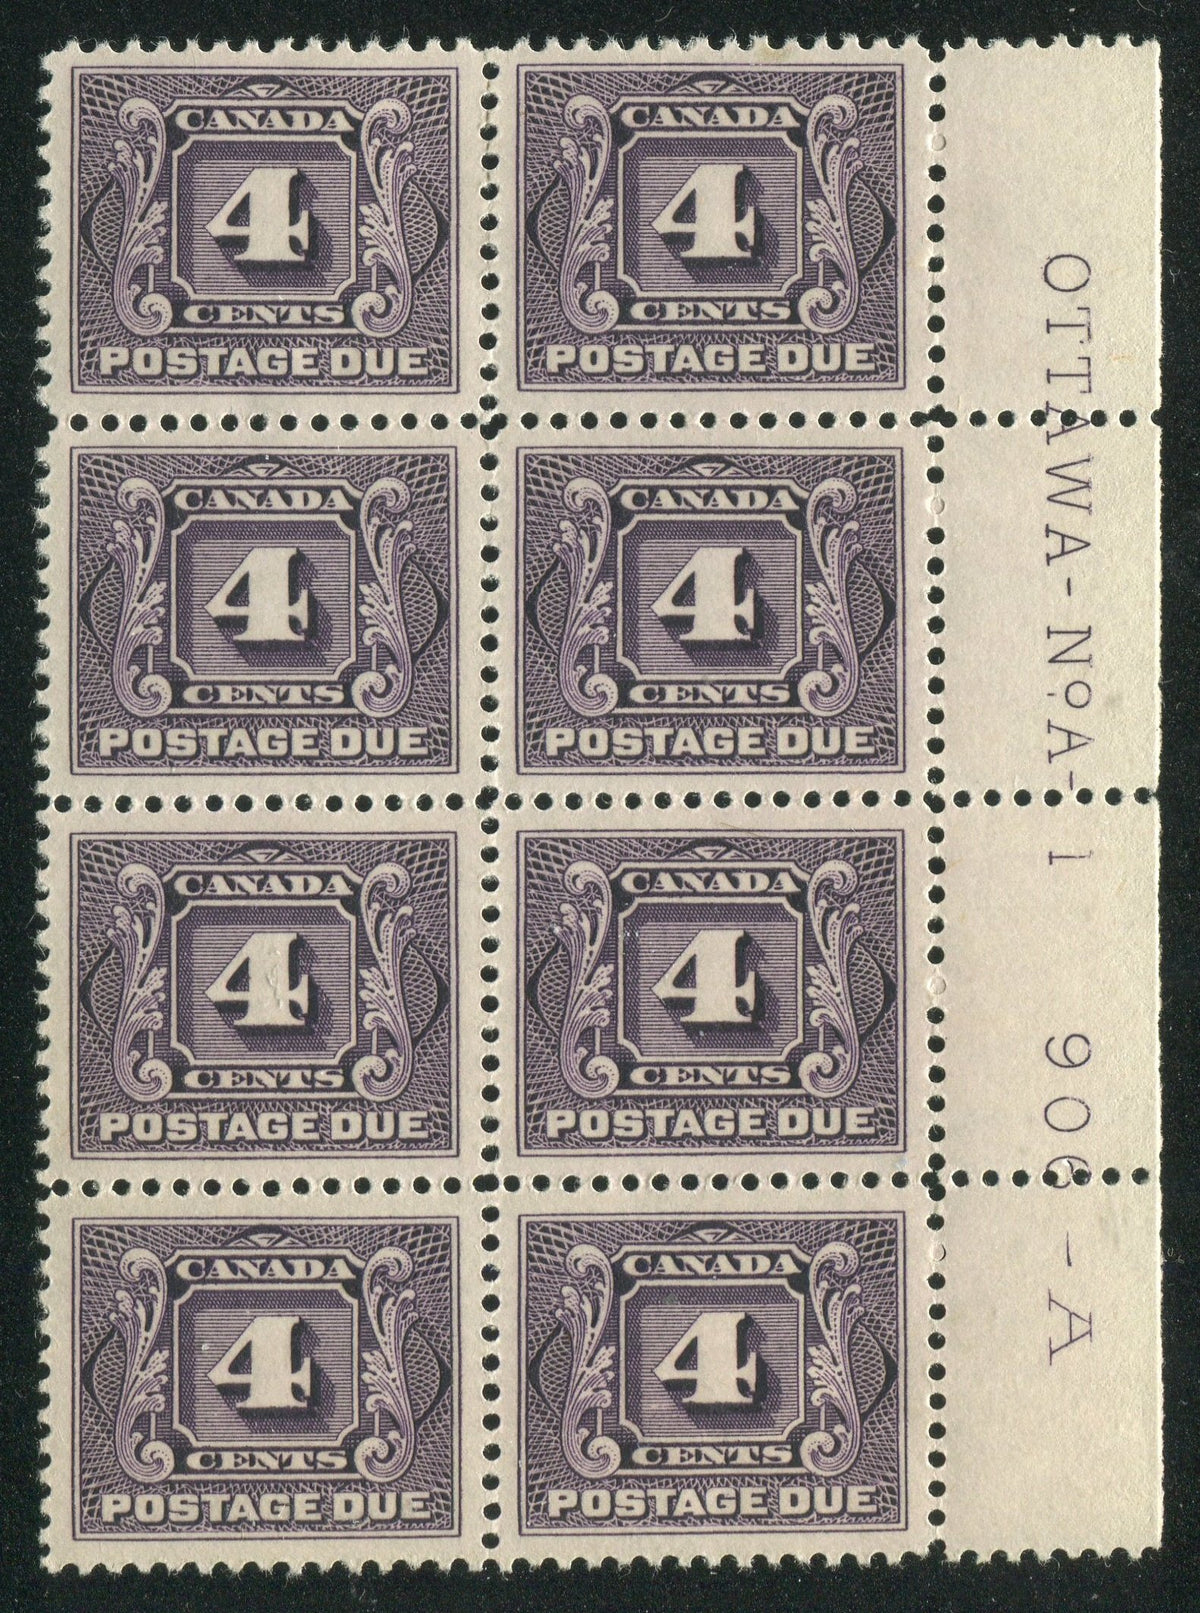 0119CA1710 - Canada J3 - Mint Plate Block of 8